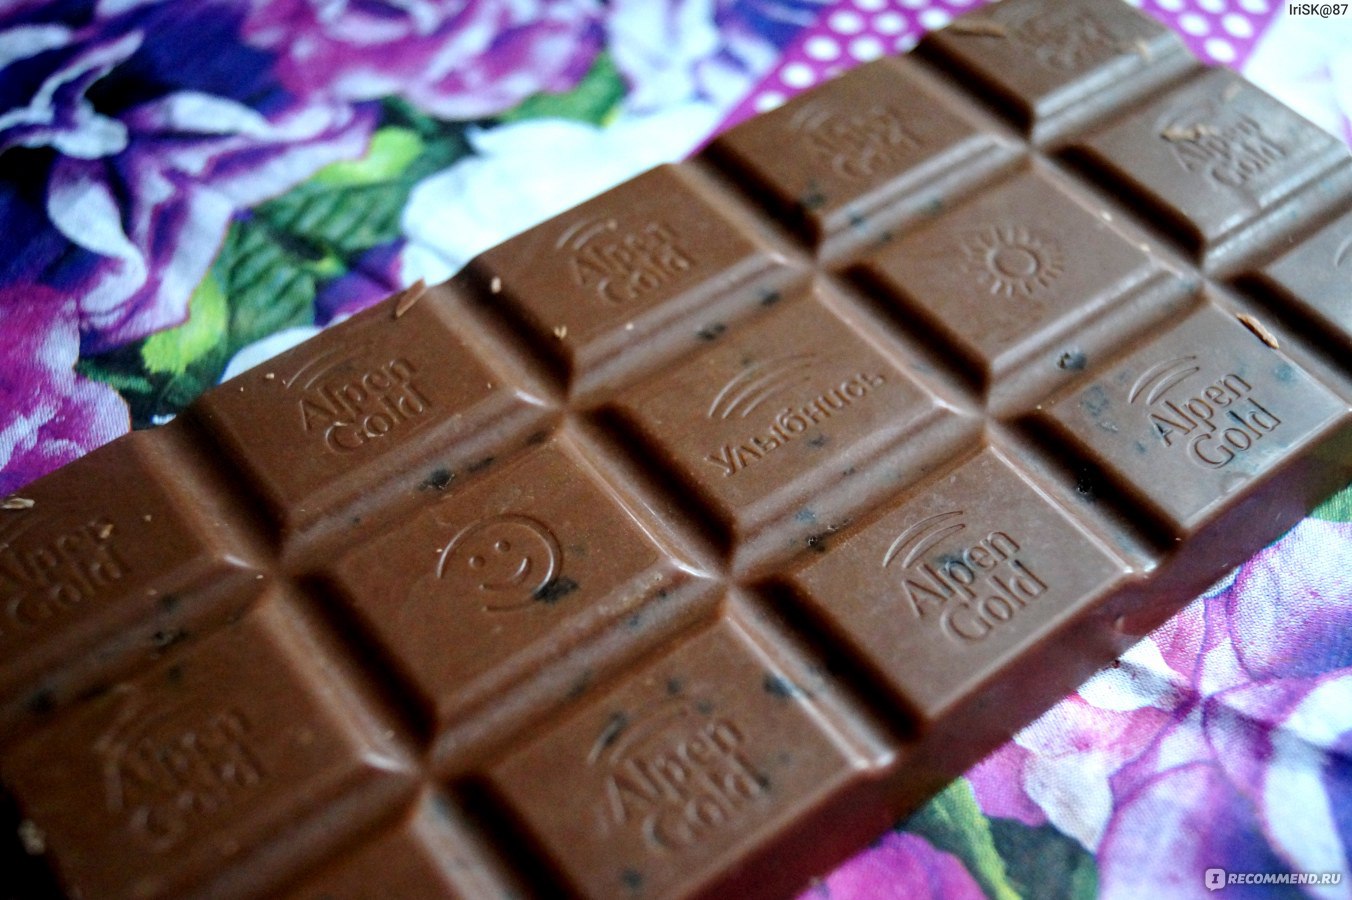 Шоколад Альпен Гольд